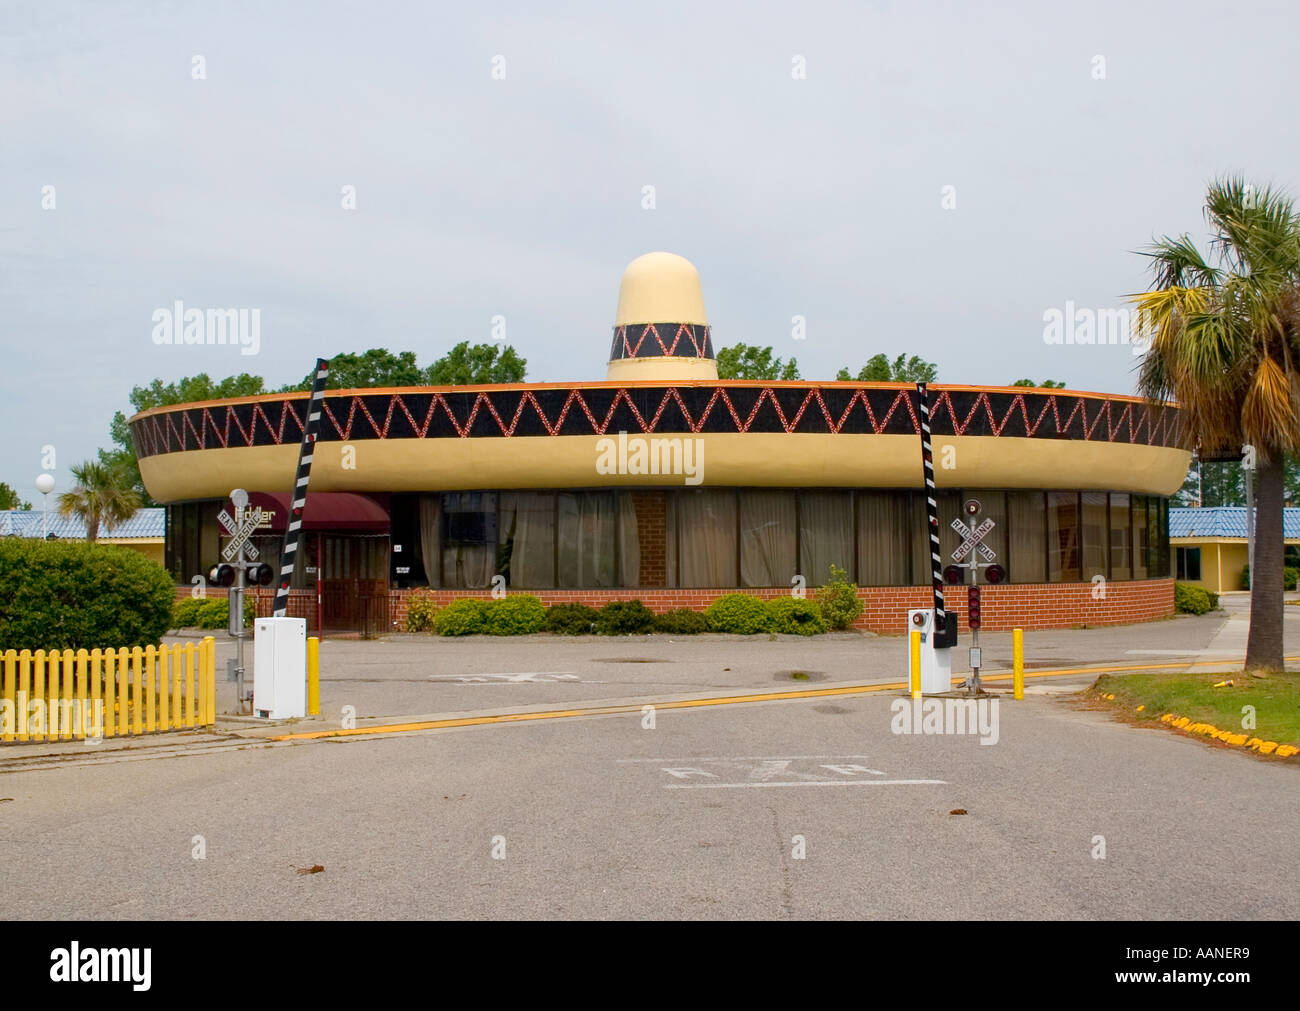 Sombrero shaped restaurant at South of the Border in Dillon South Carolina Stock Photo